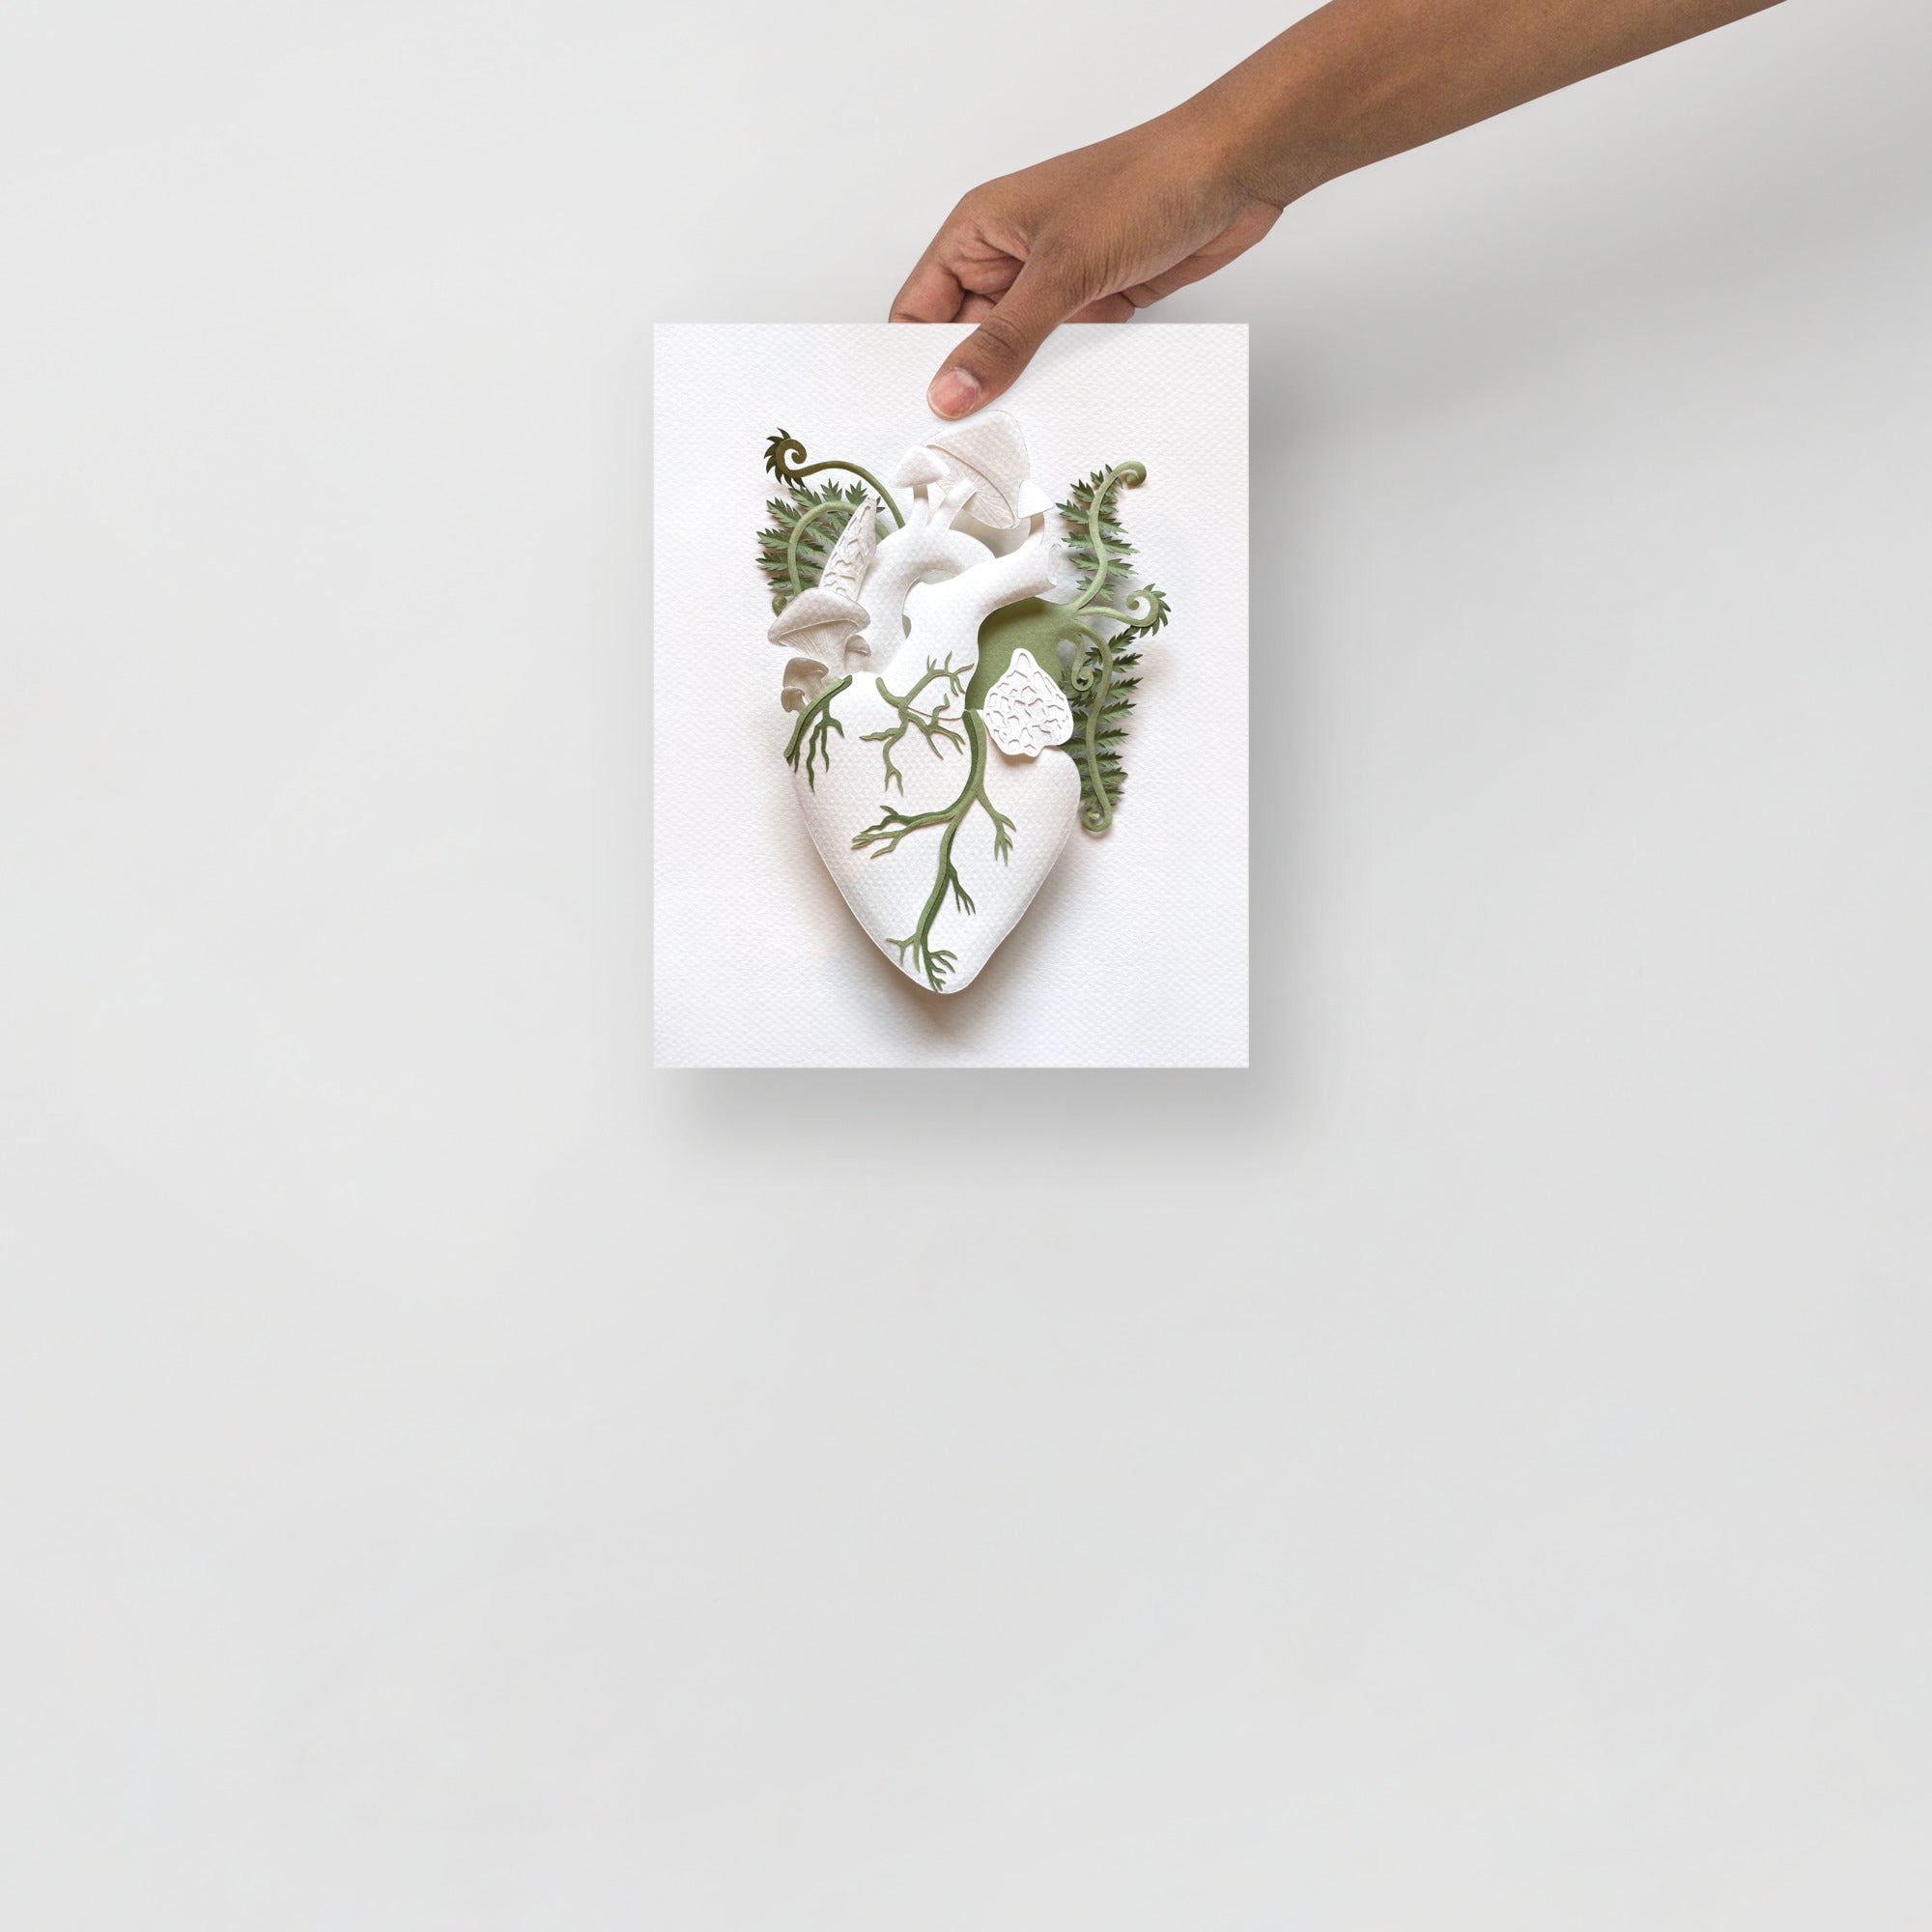 Healing Heart: Morels 8" x 10" print